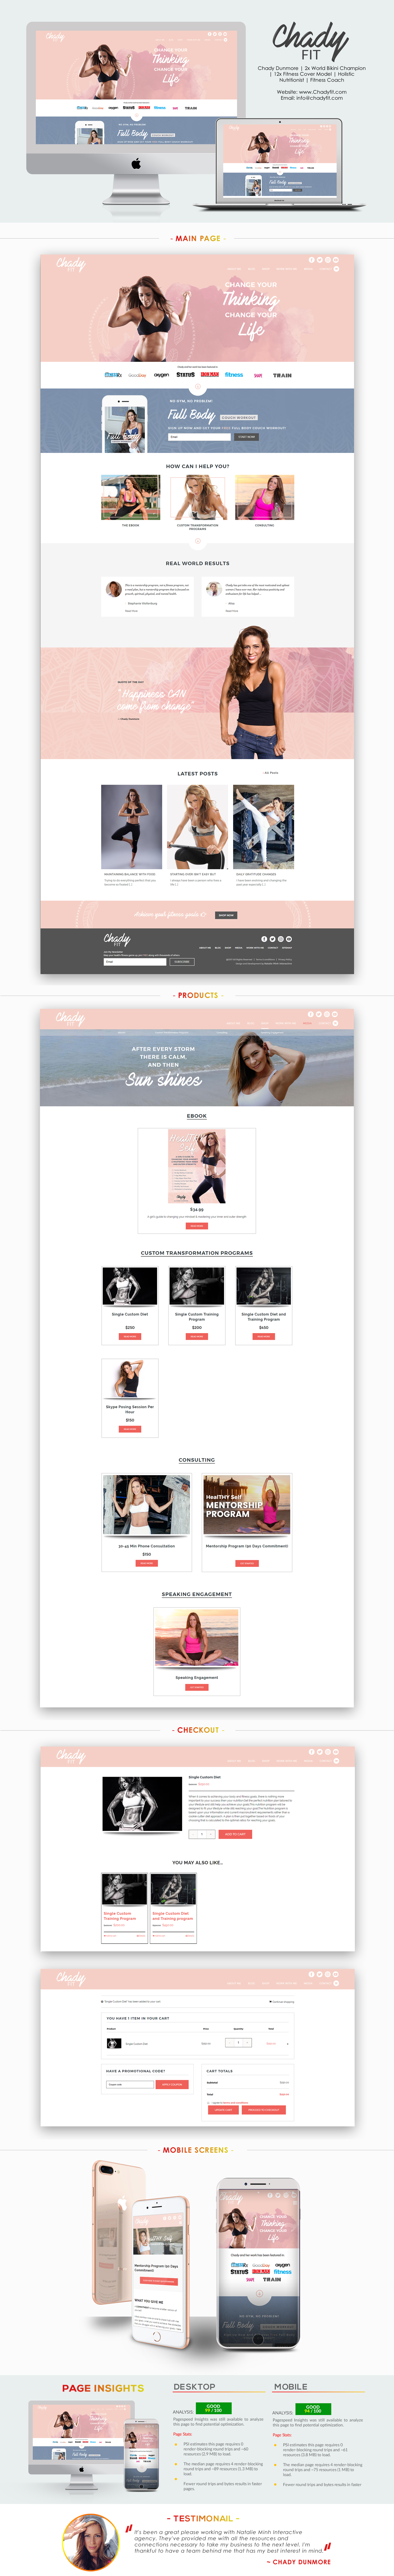 Chady Dunmore Fitness Website Design 